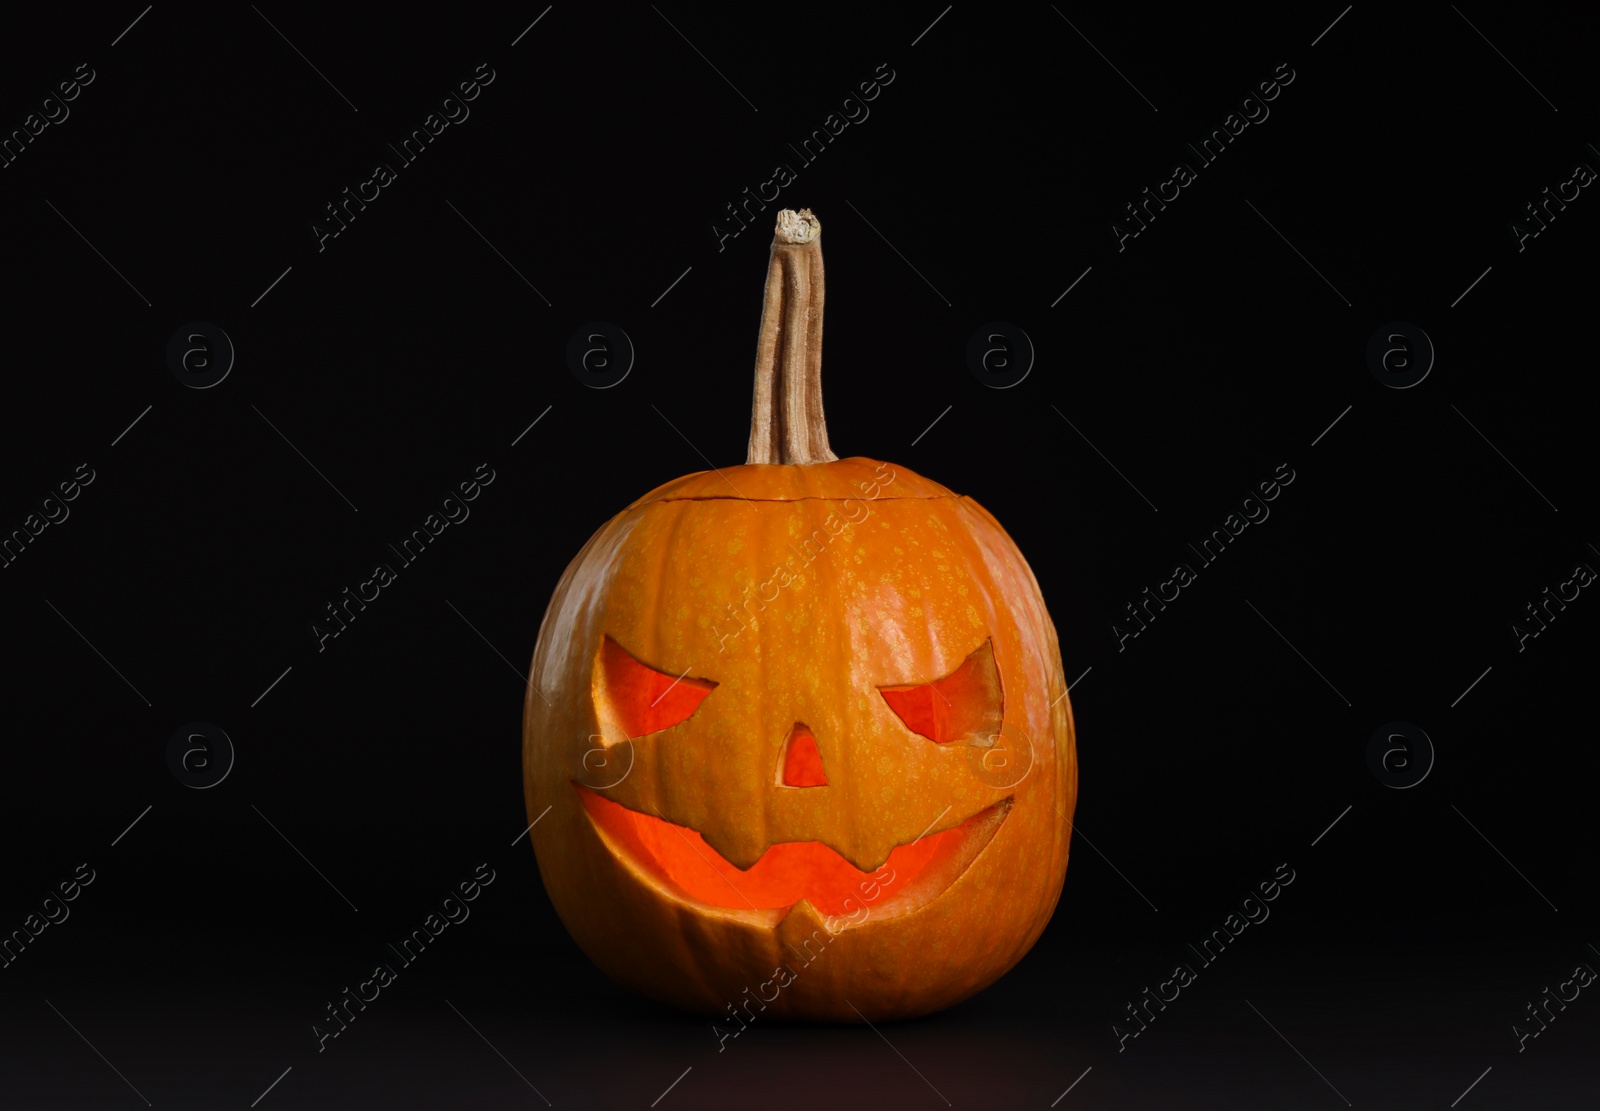 Photo of Pumpkin head on black background. Jack lantern - traditional Halloween decor